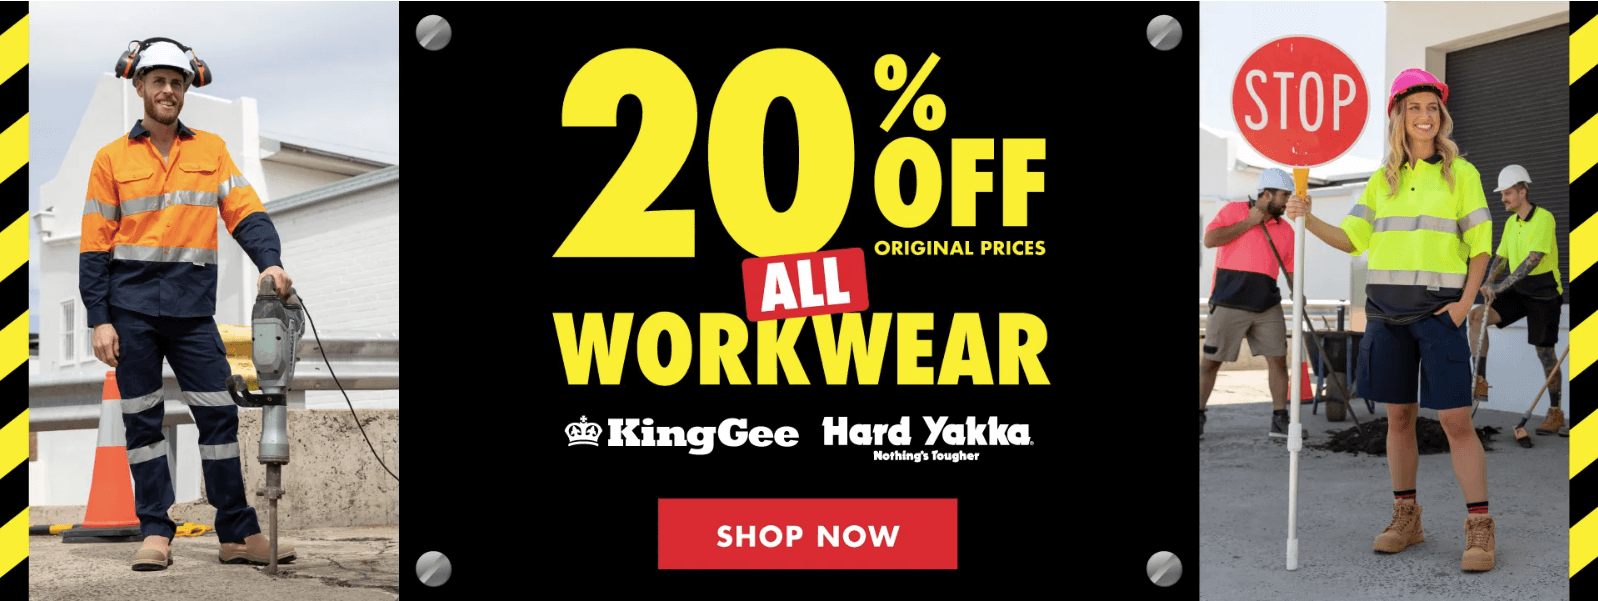 20% Workwear